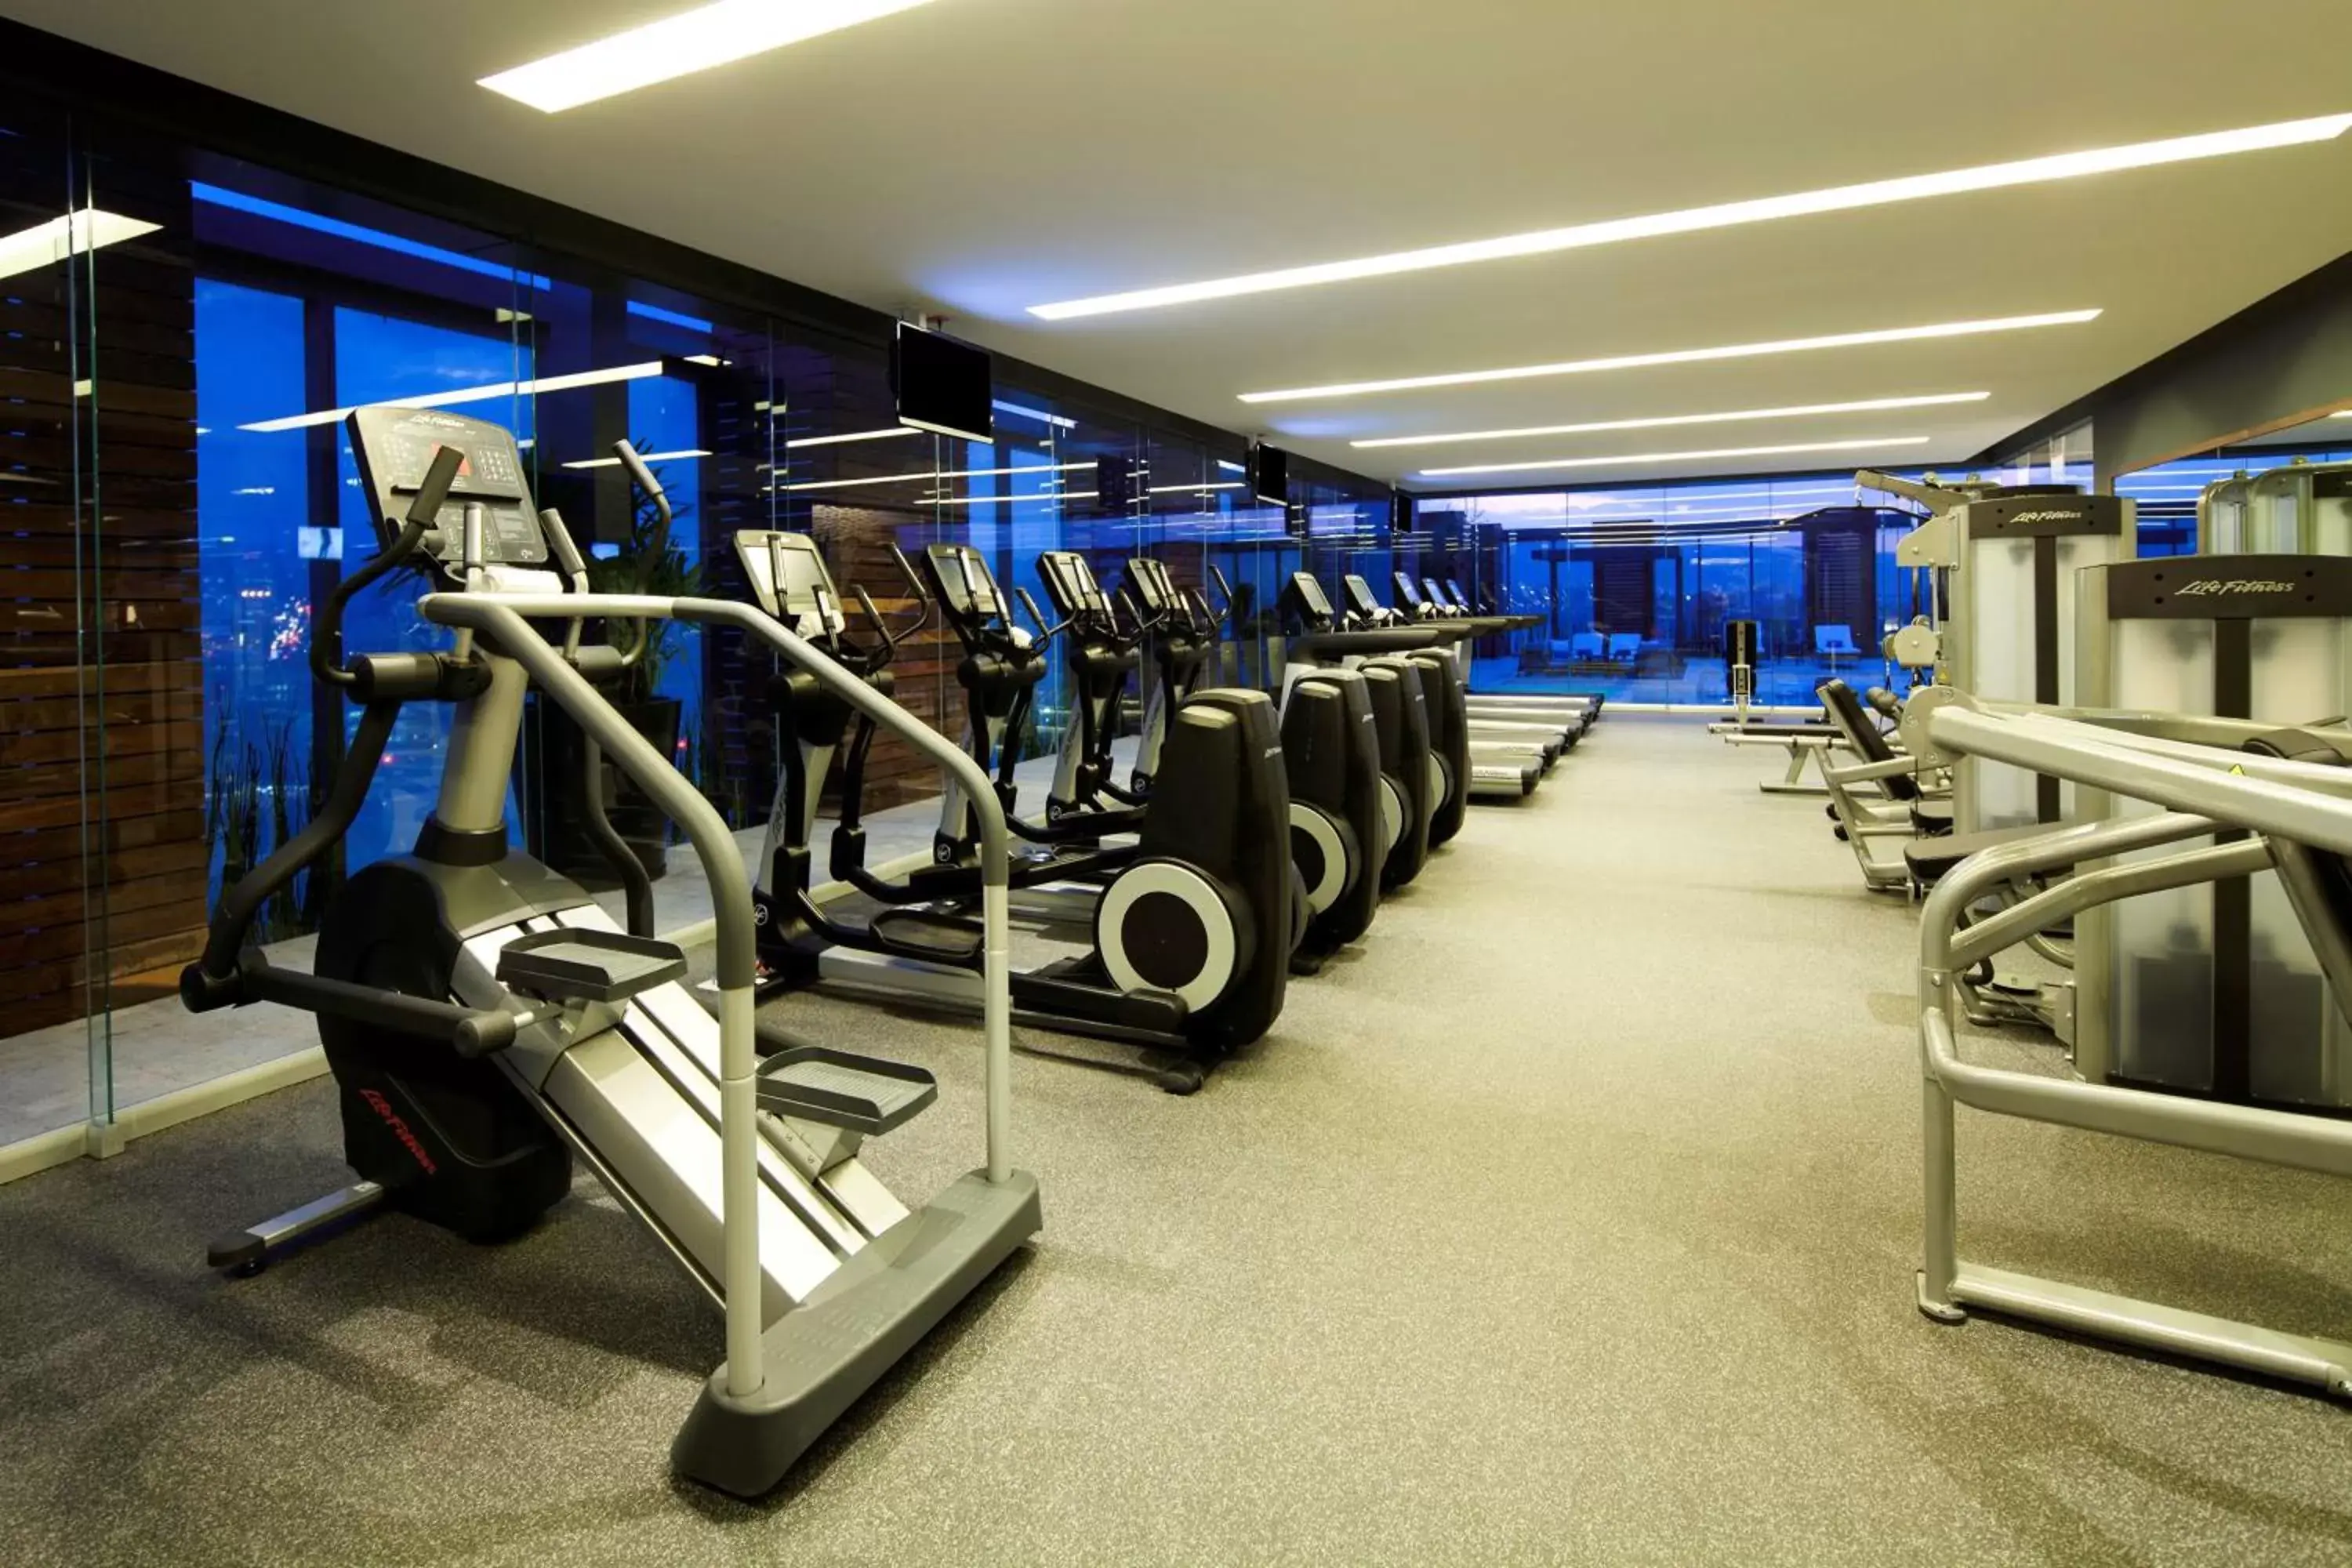 Fitness centre/facilities, Fitness Center/Facilities in Hilton Mexico City Santa Fe